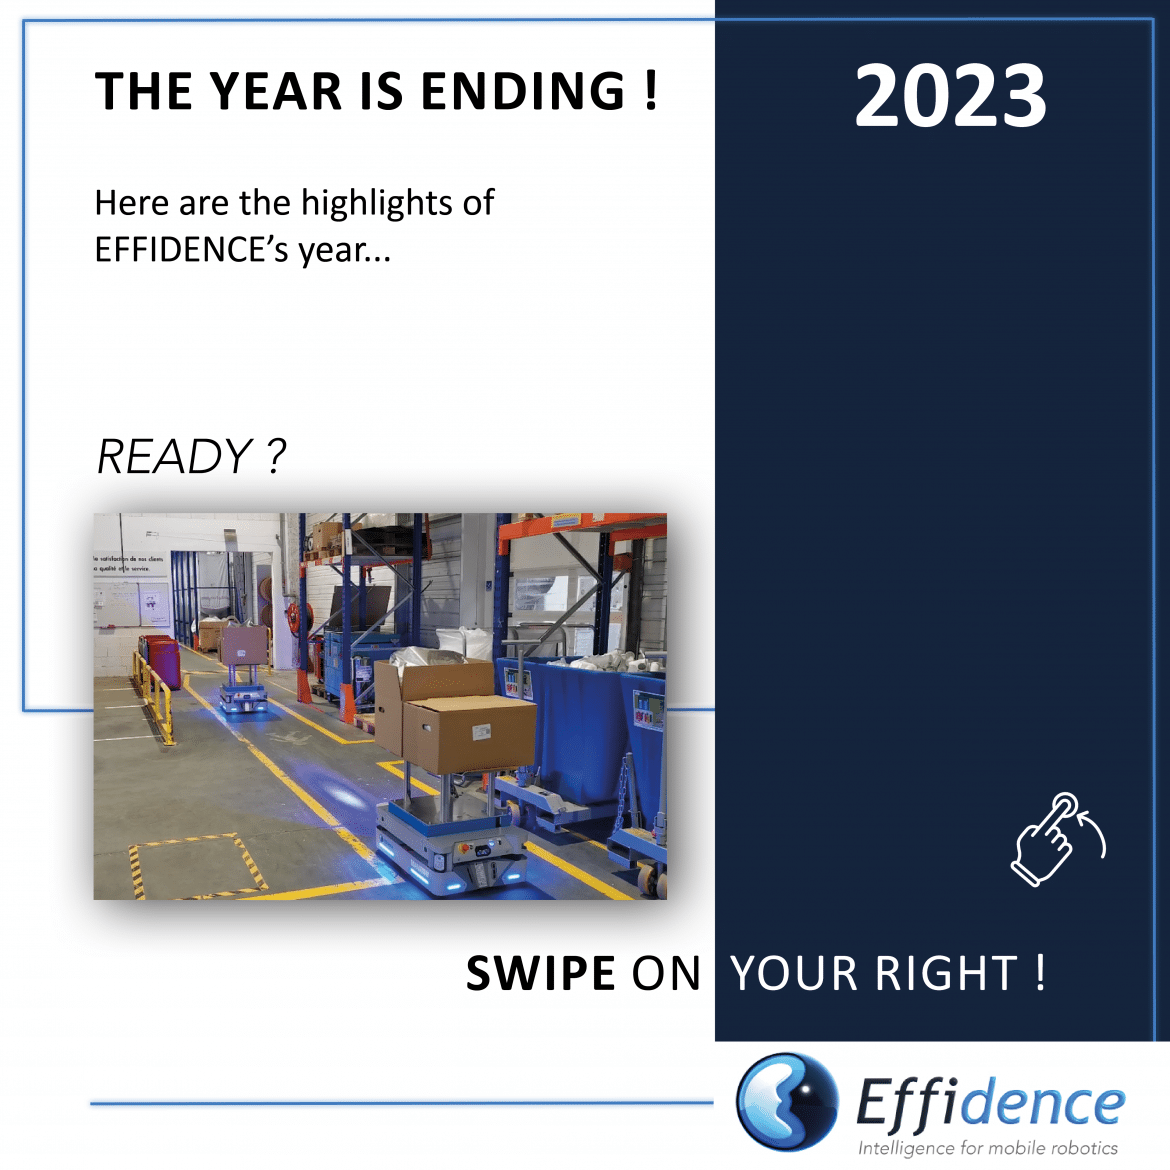 Effidence's highlights of 2023